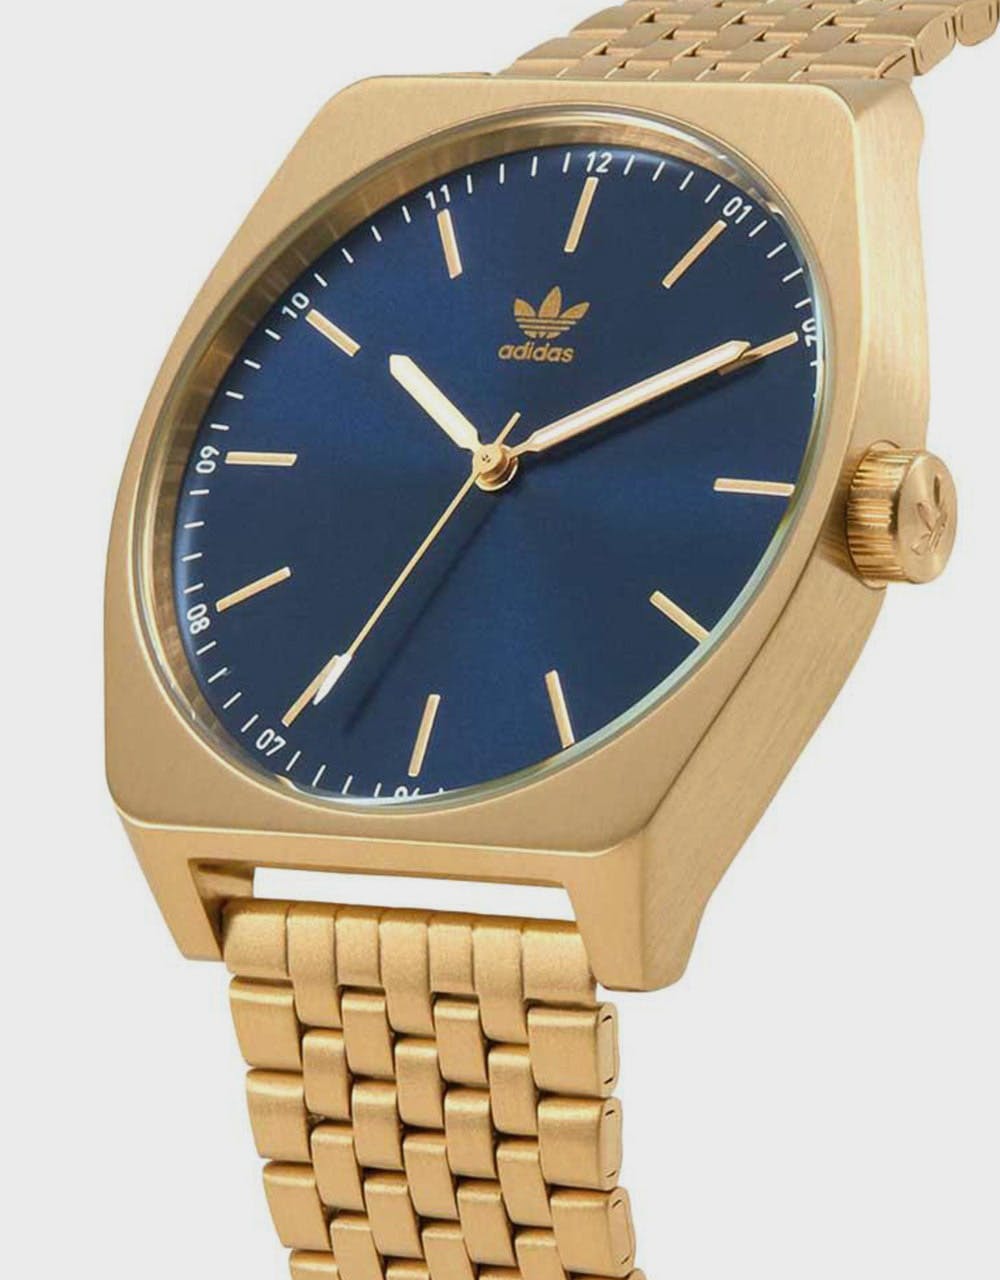 Adidas Process M1 Watch - Gold/Navy Sunray